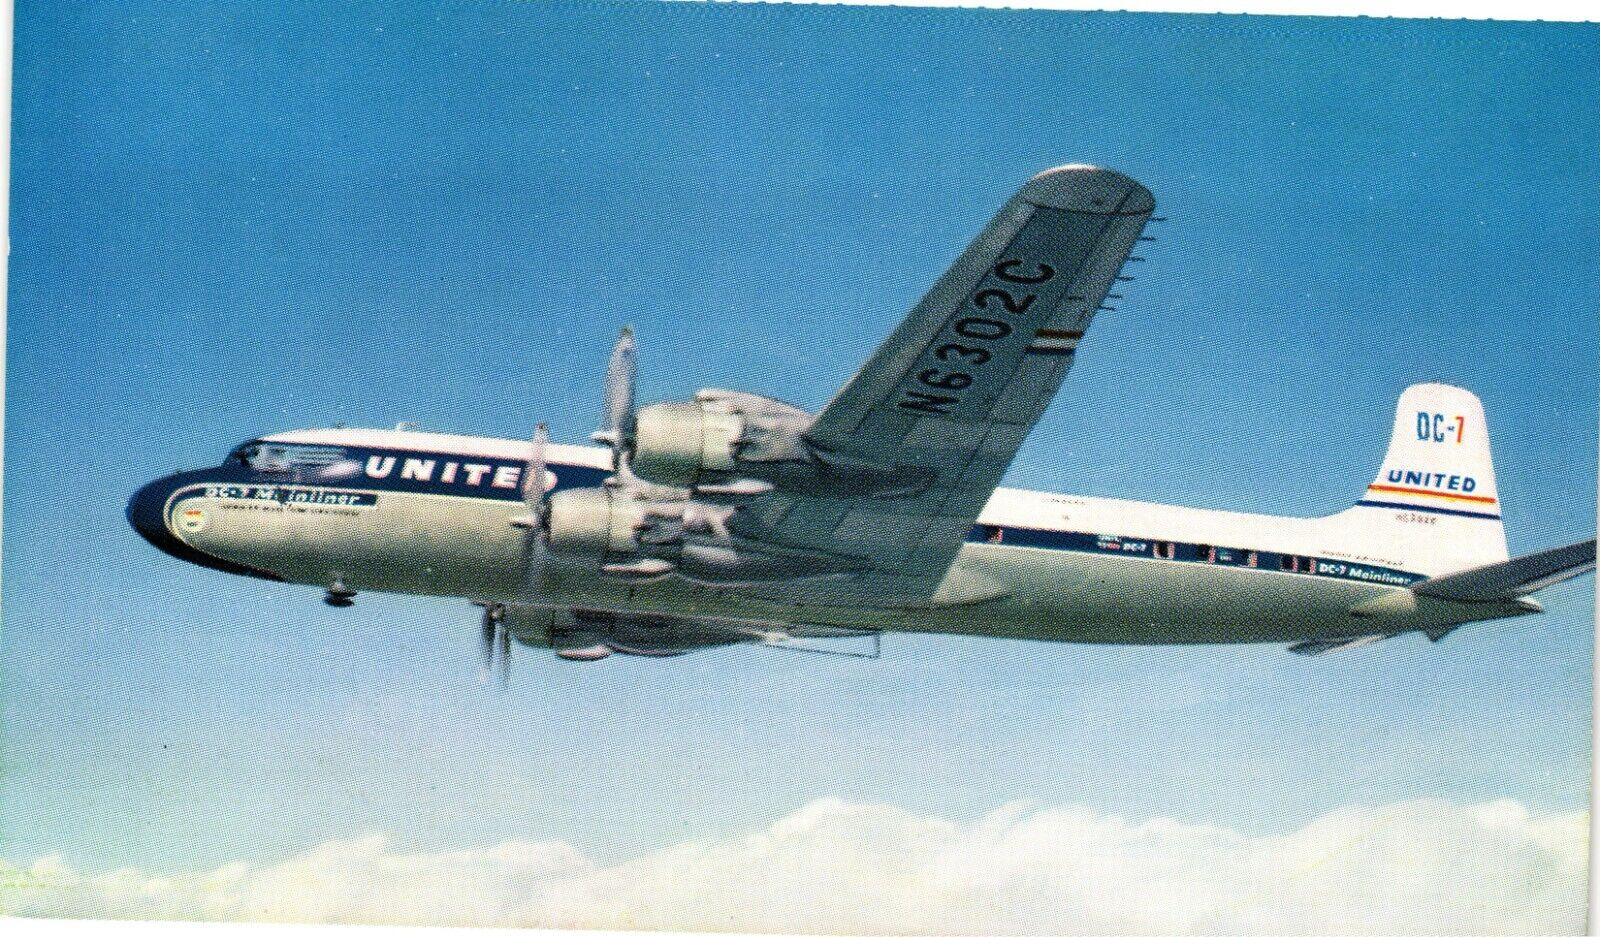 United Airlines DC-7 Jet in Flight Unused 1957 Postcard